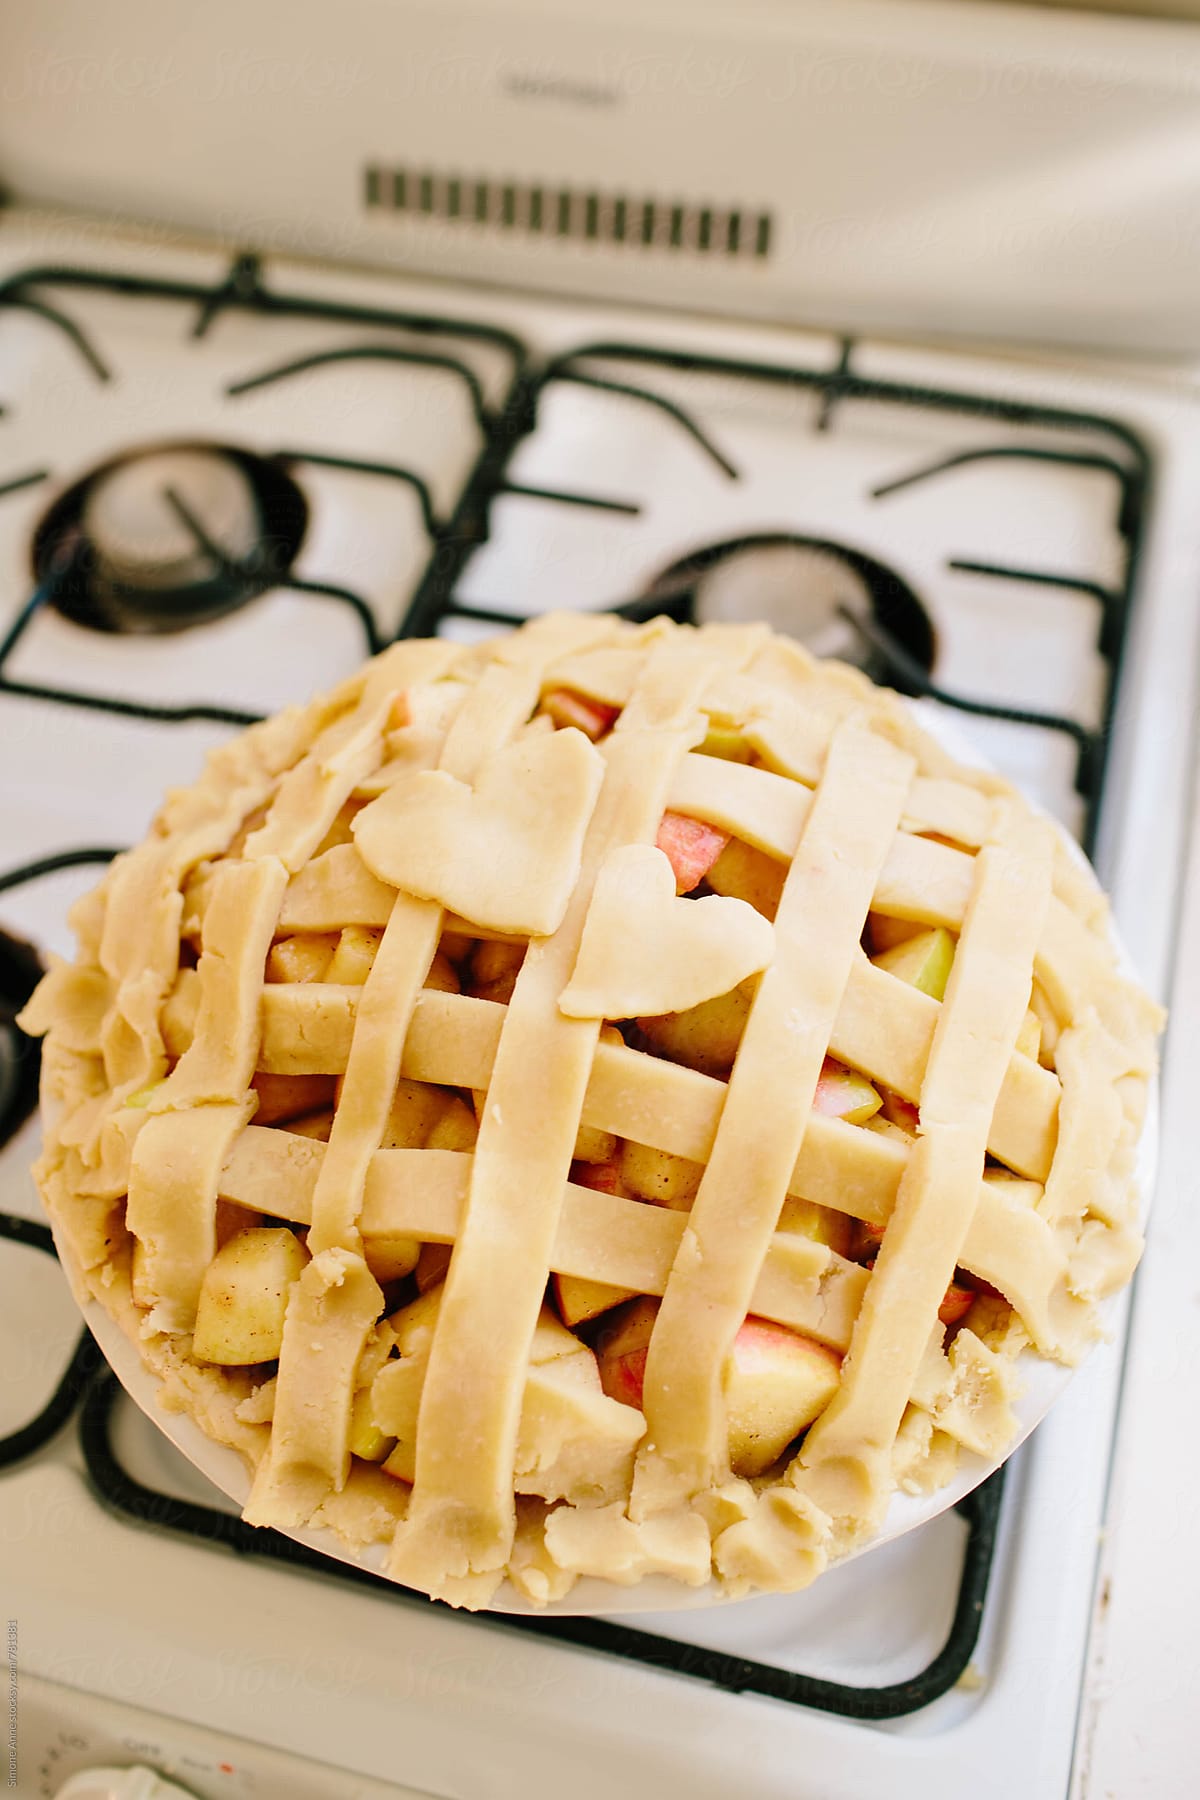 Unbaked apple pie